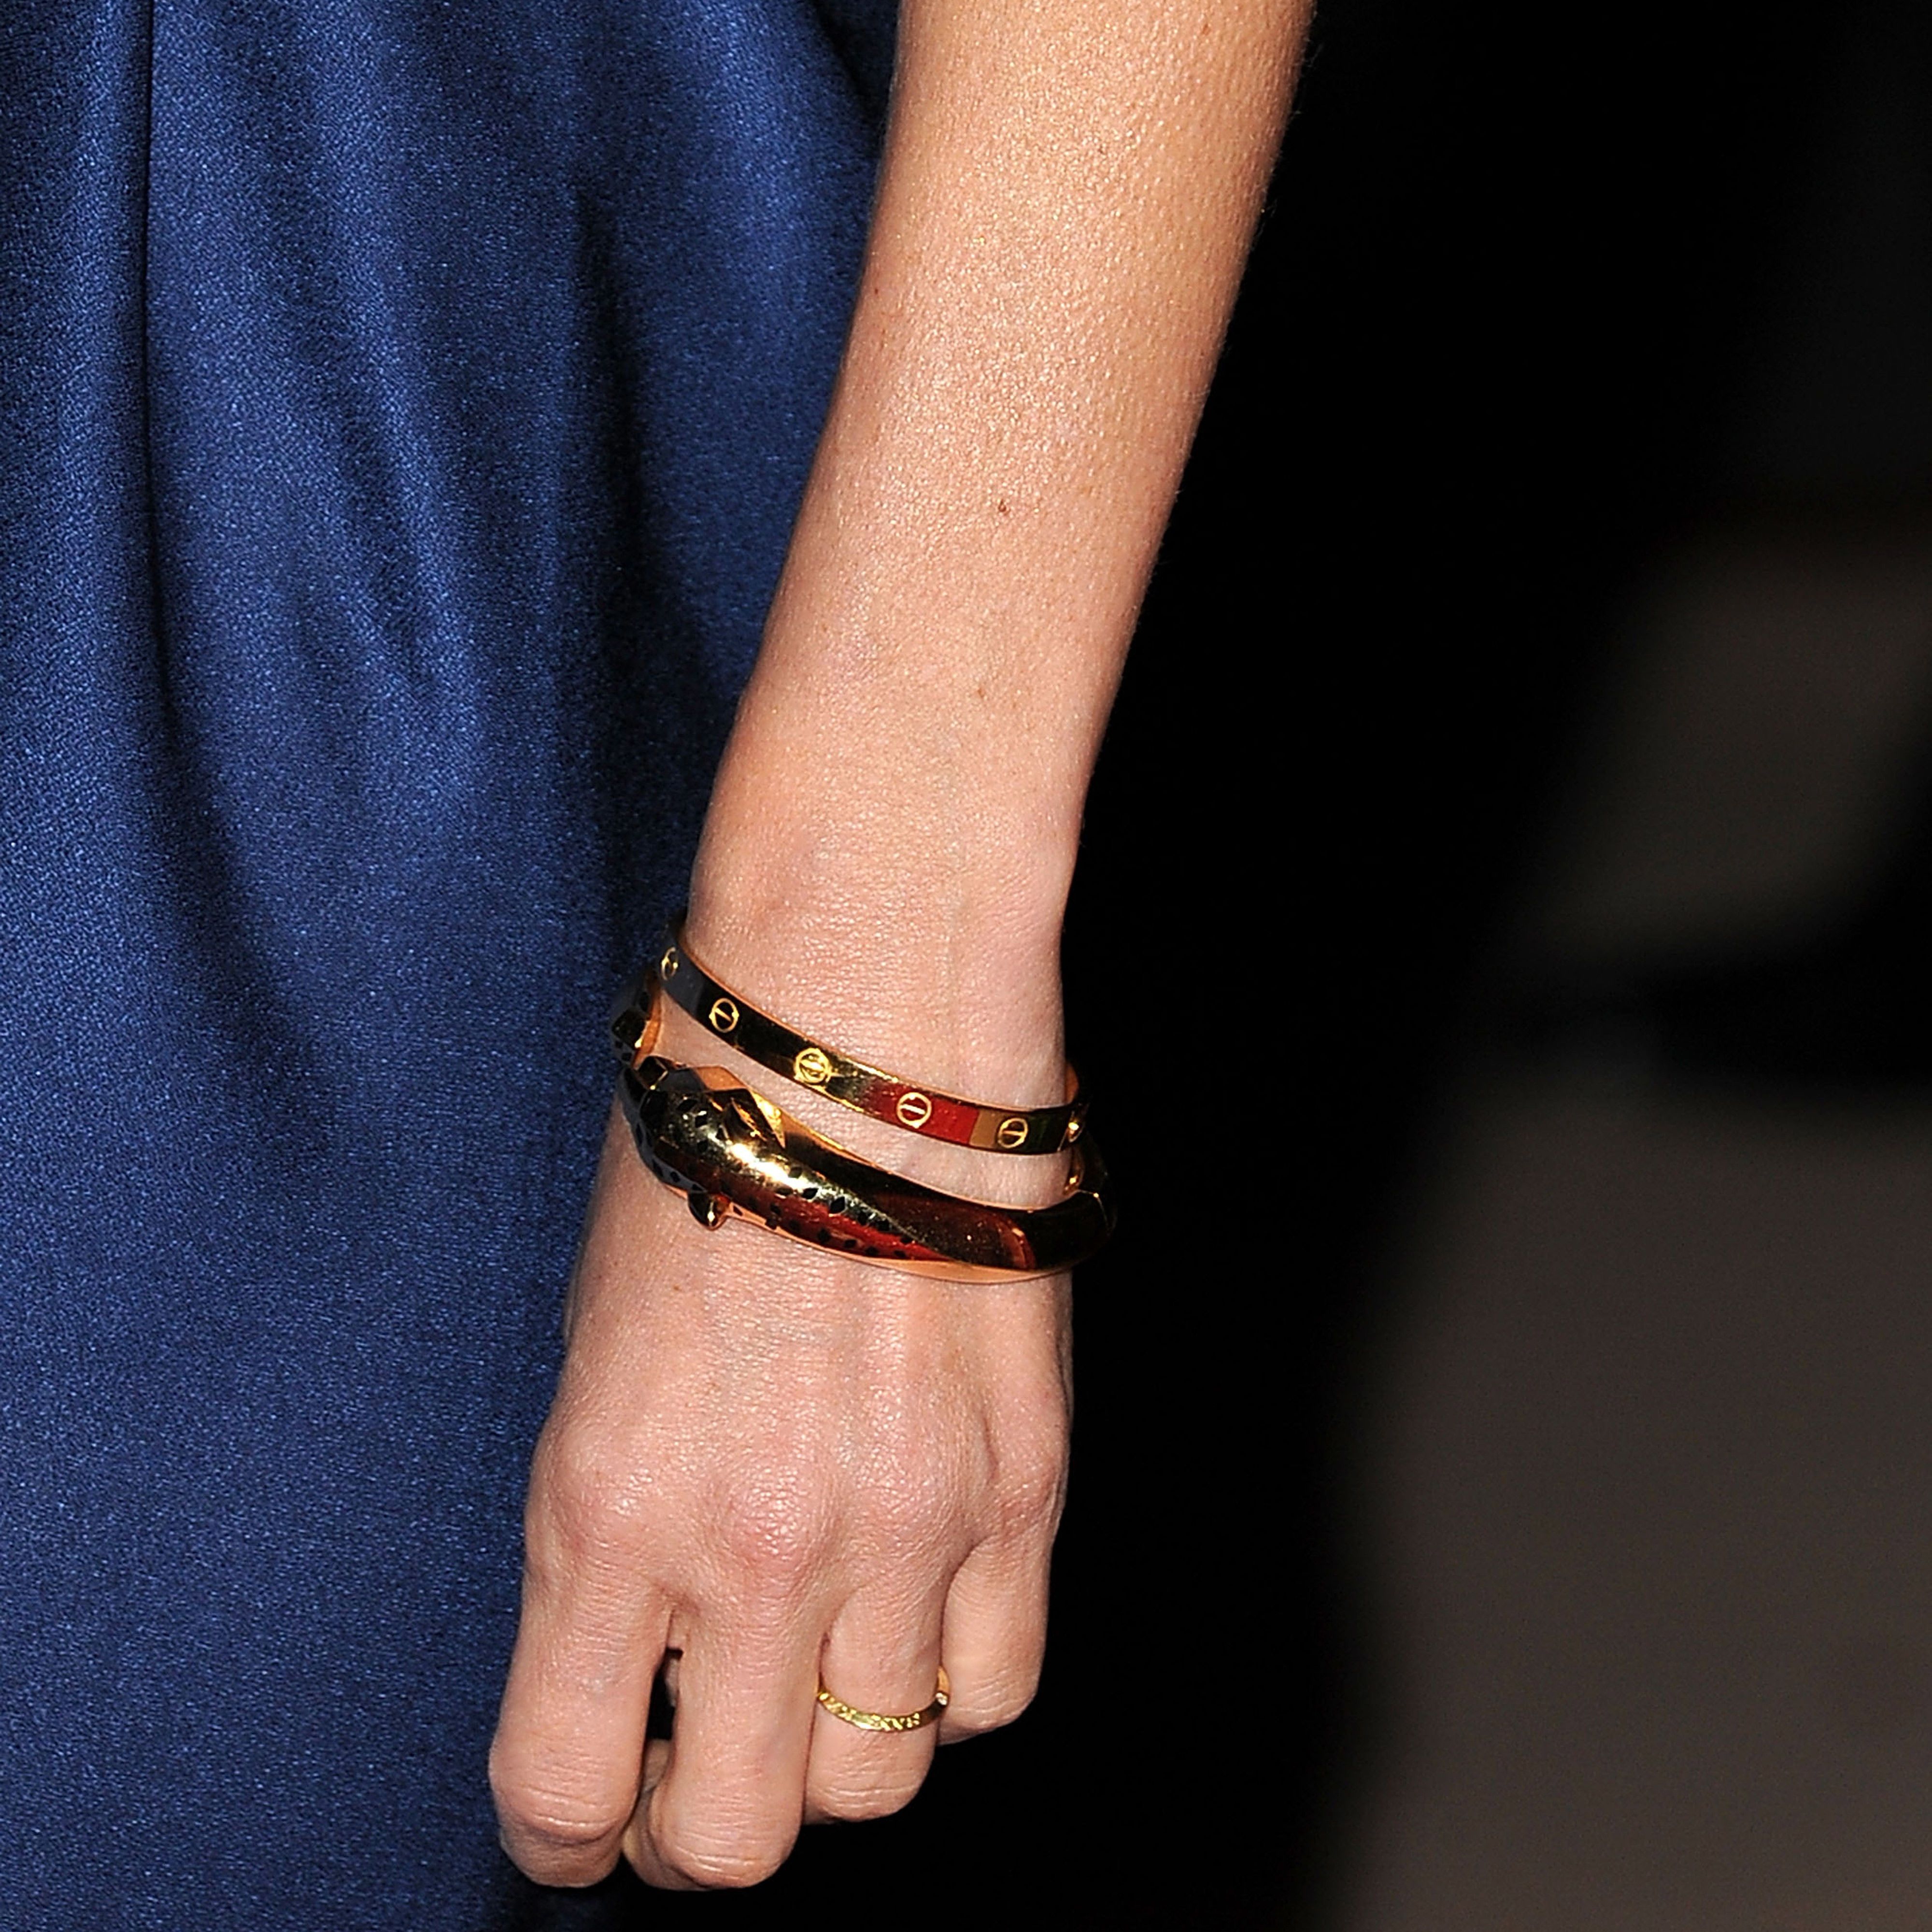 celebrities have cartier love bracelet